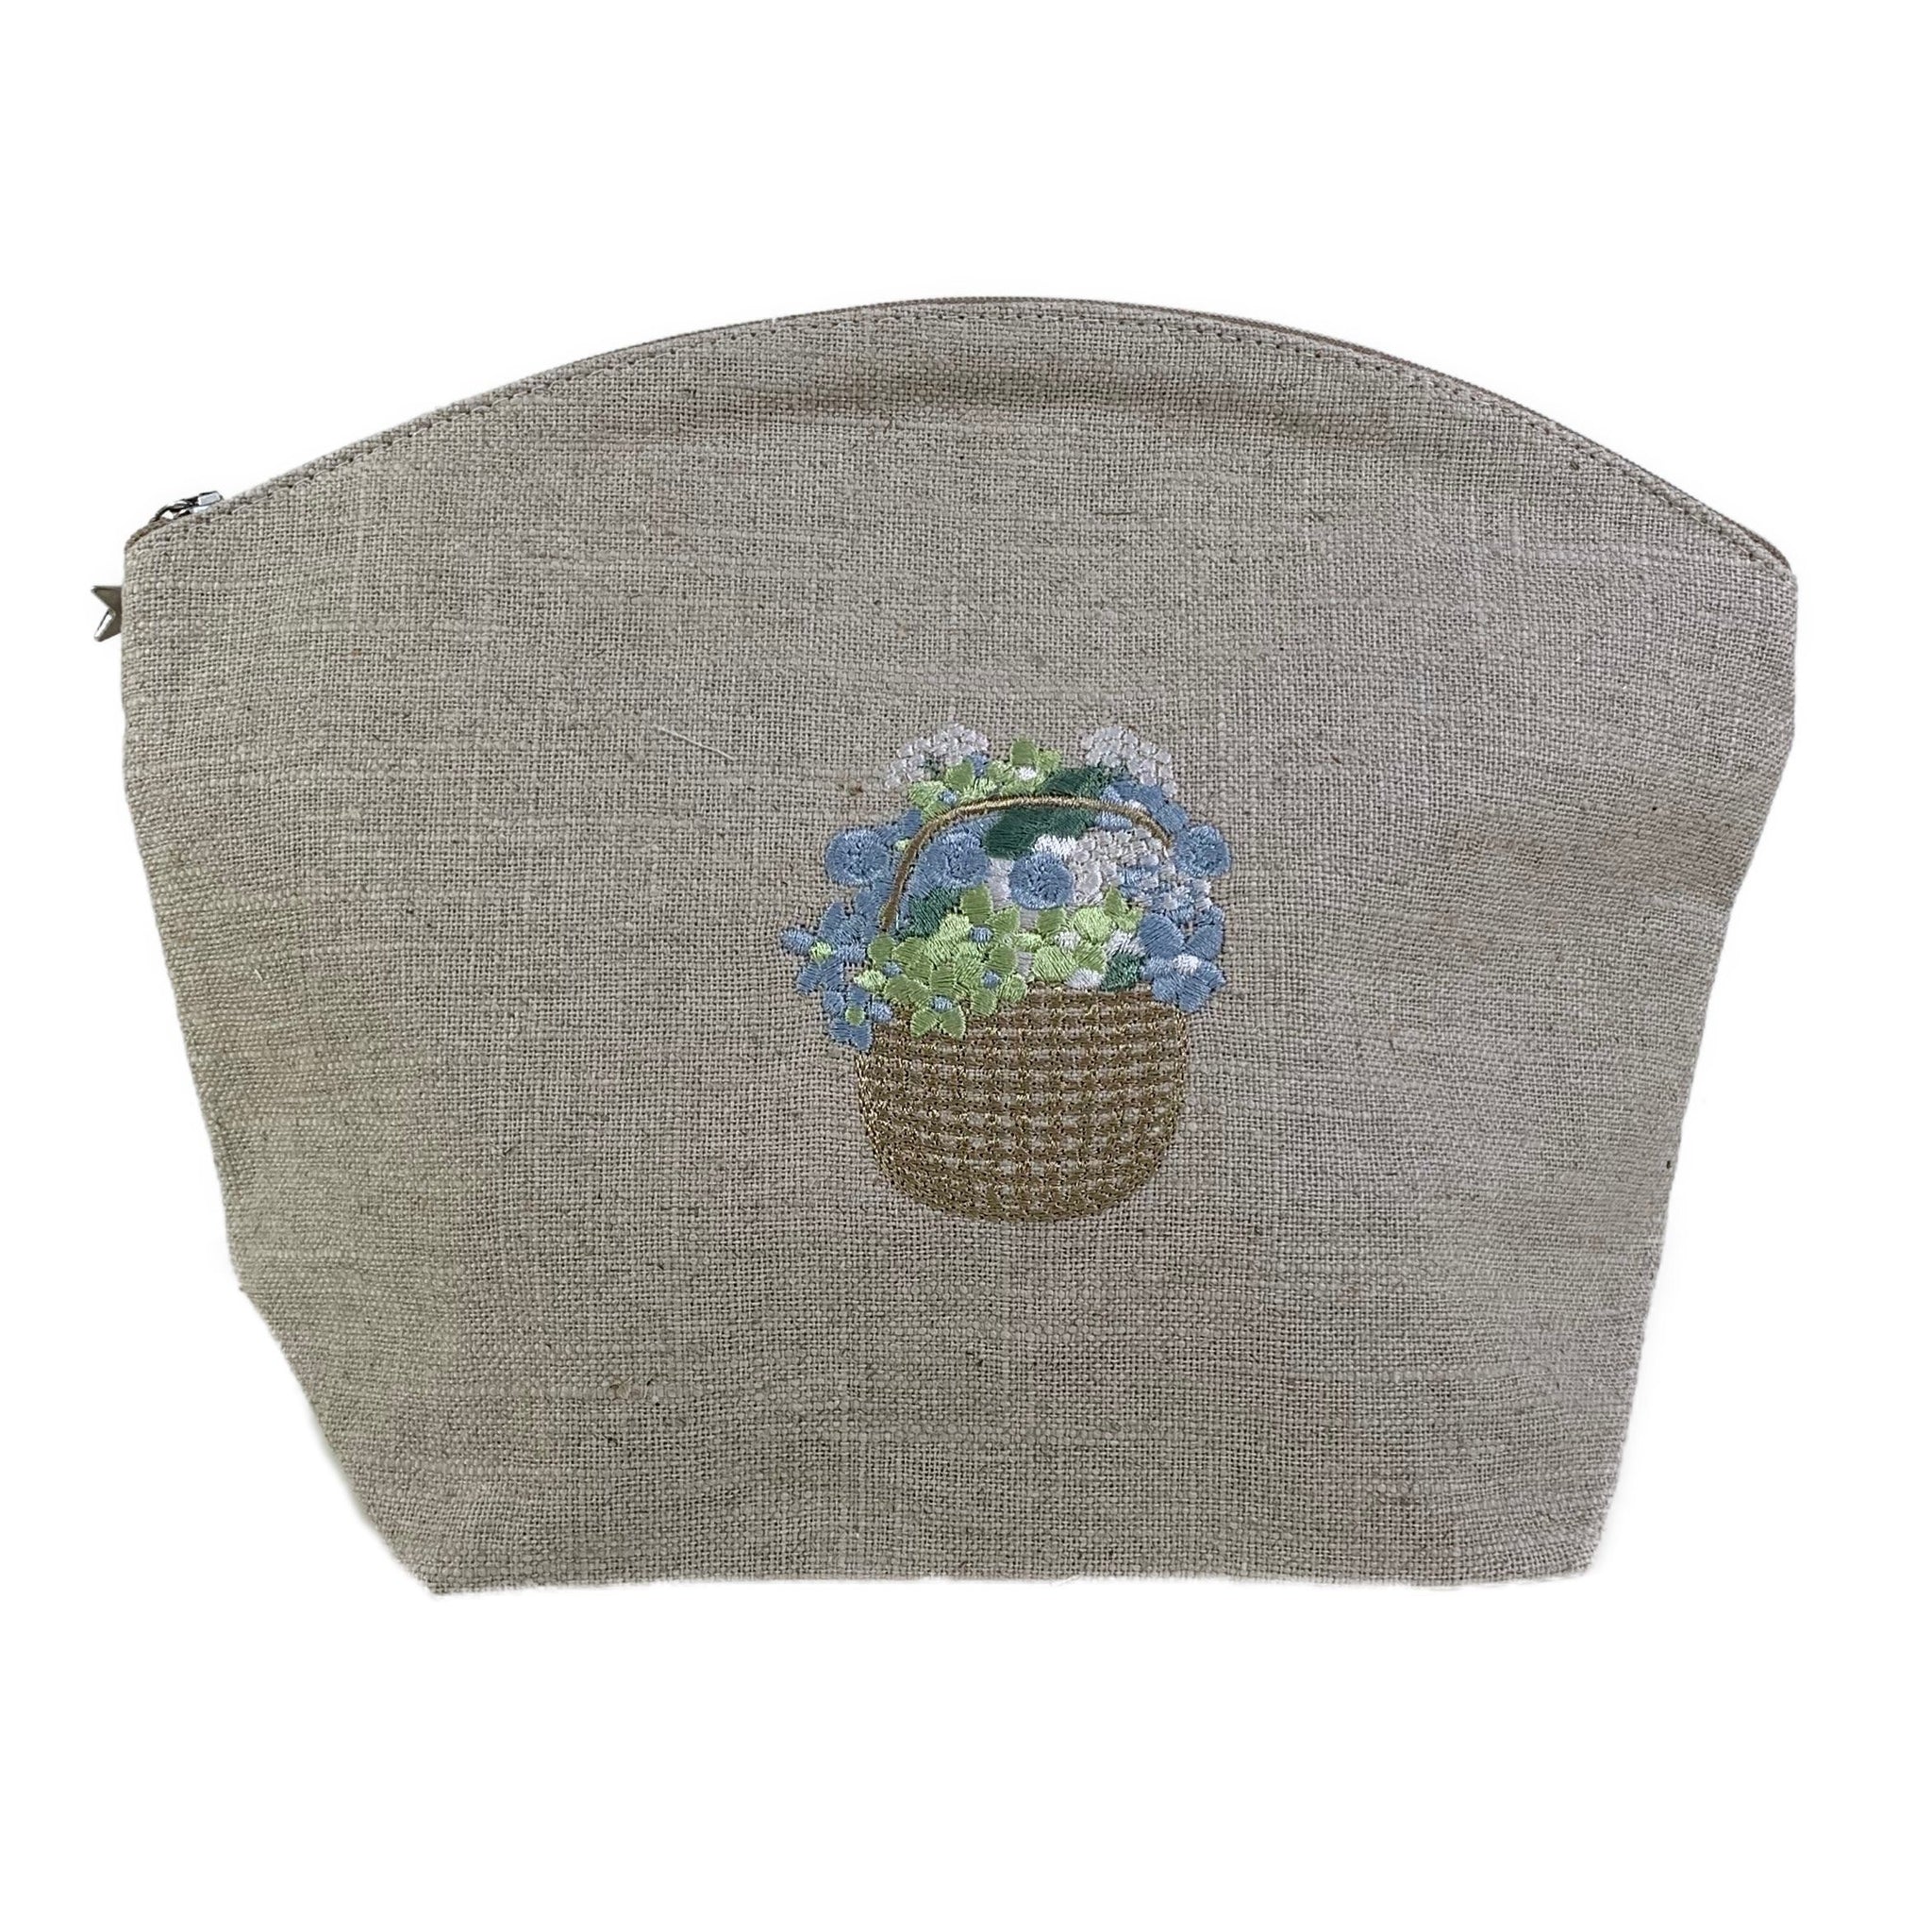 Basket of Blooms Cosmetic Bag in Natural